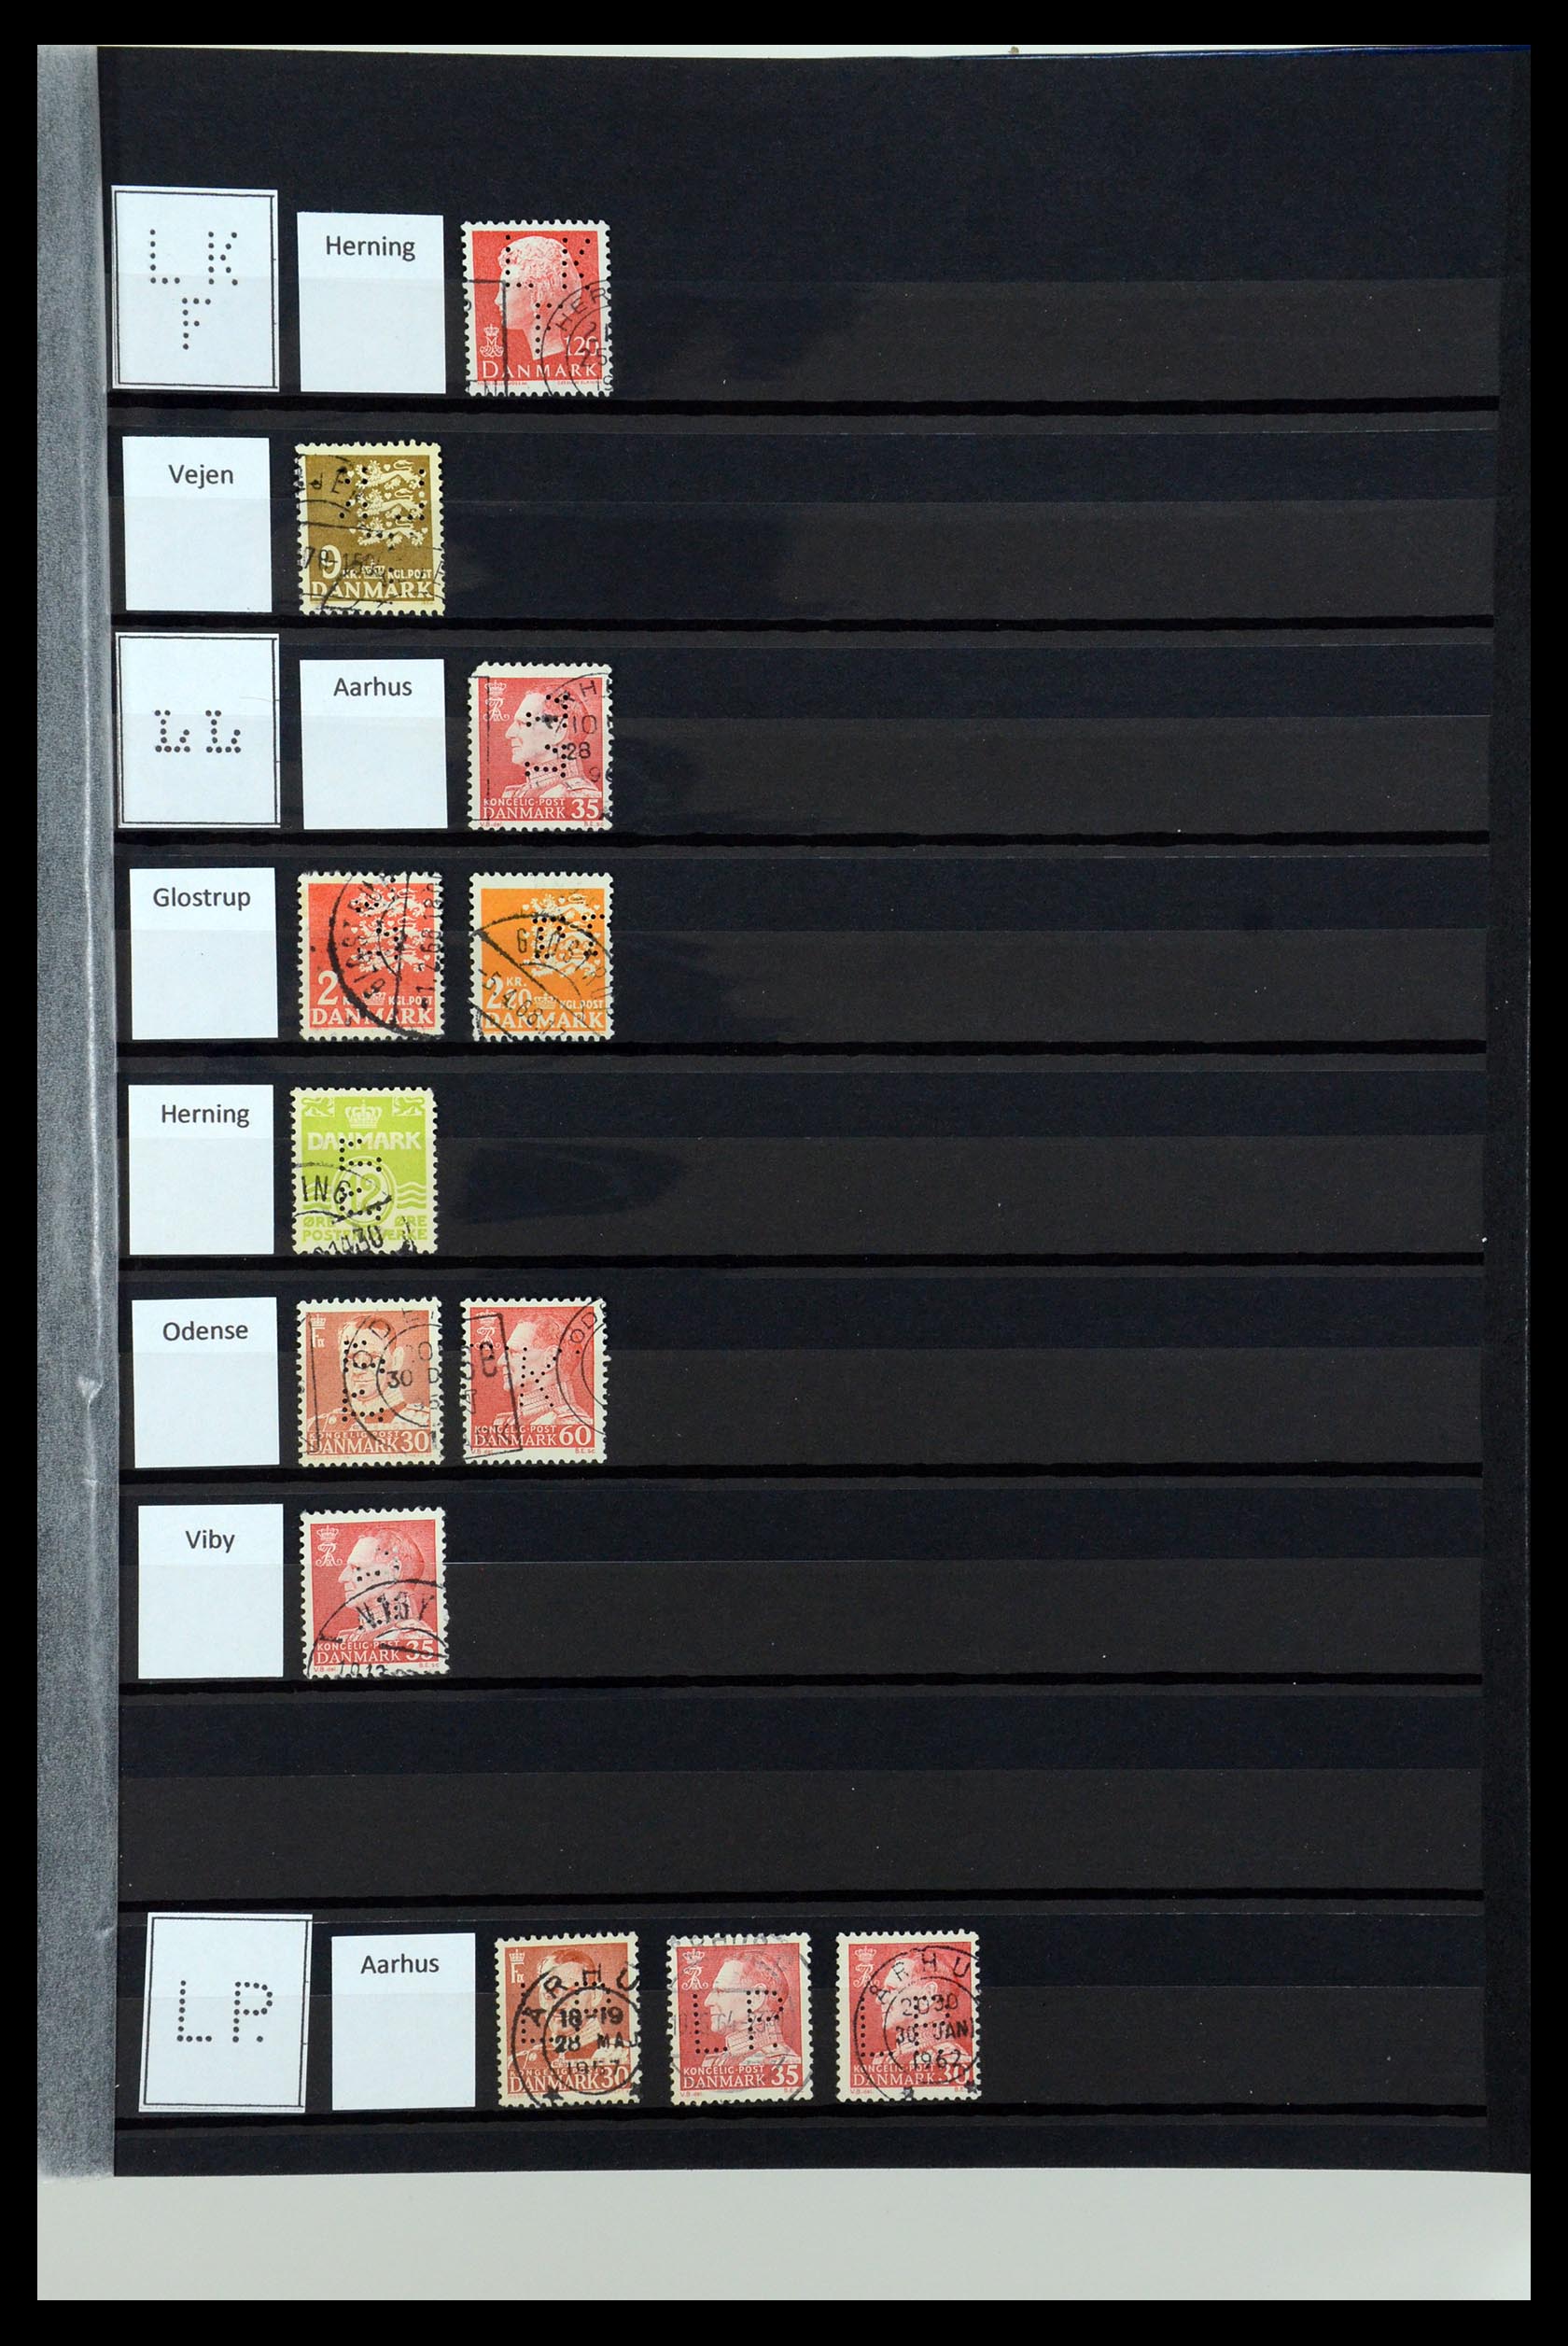 36396 094 - Stamp collection 36396 Denmark perfins.